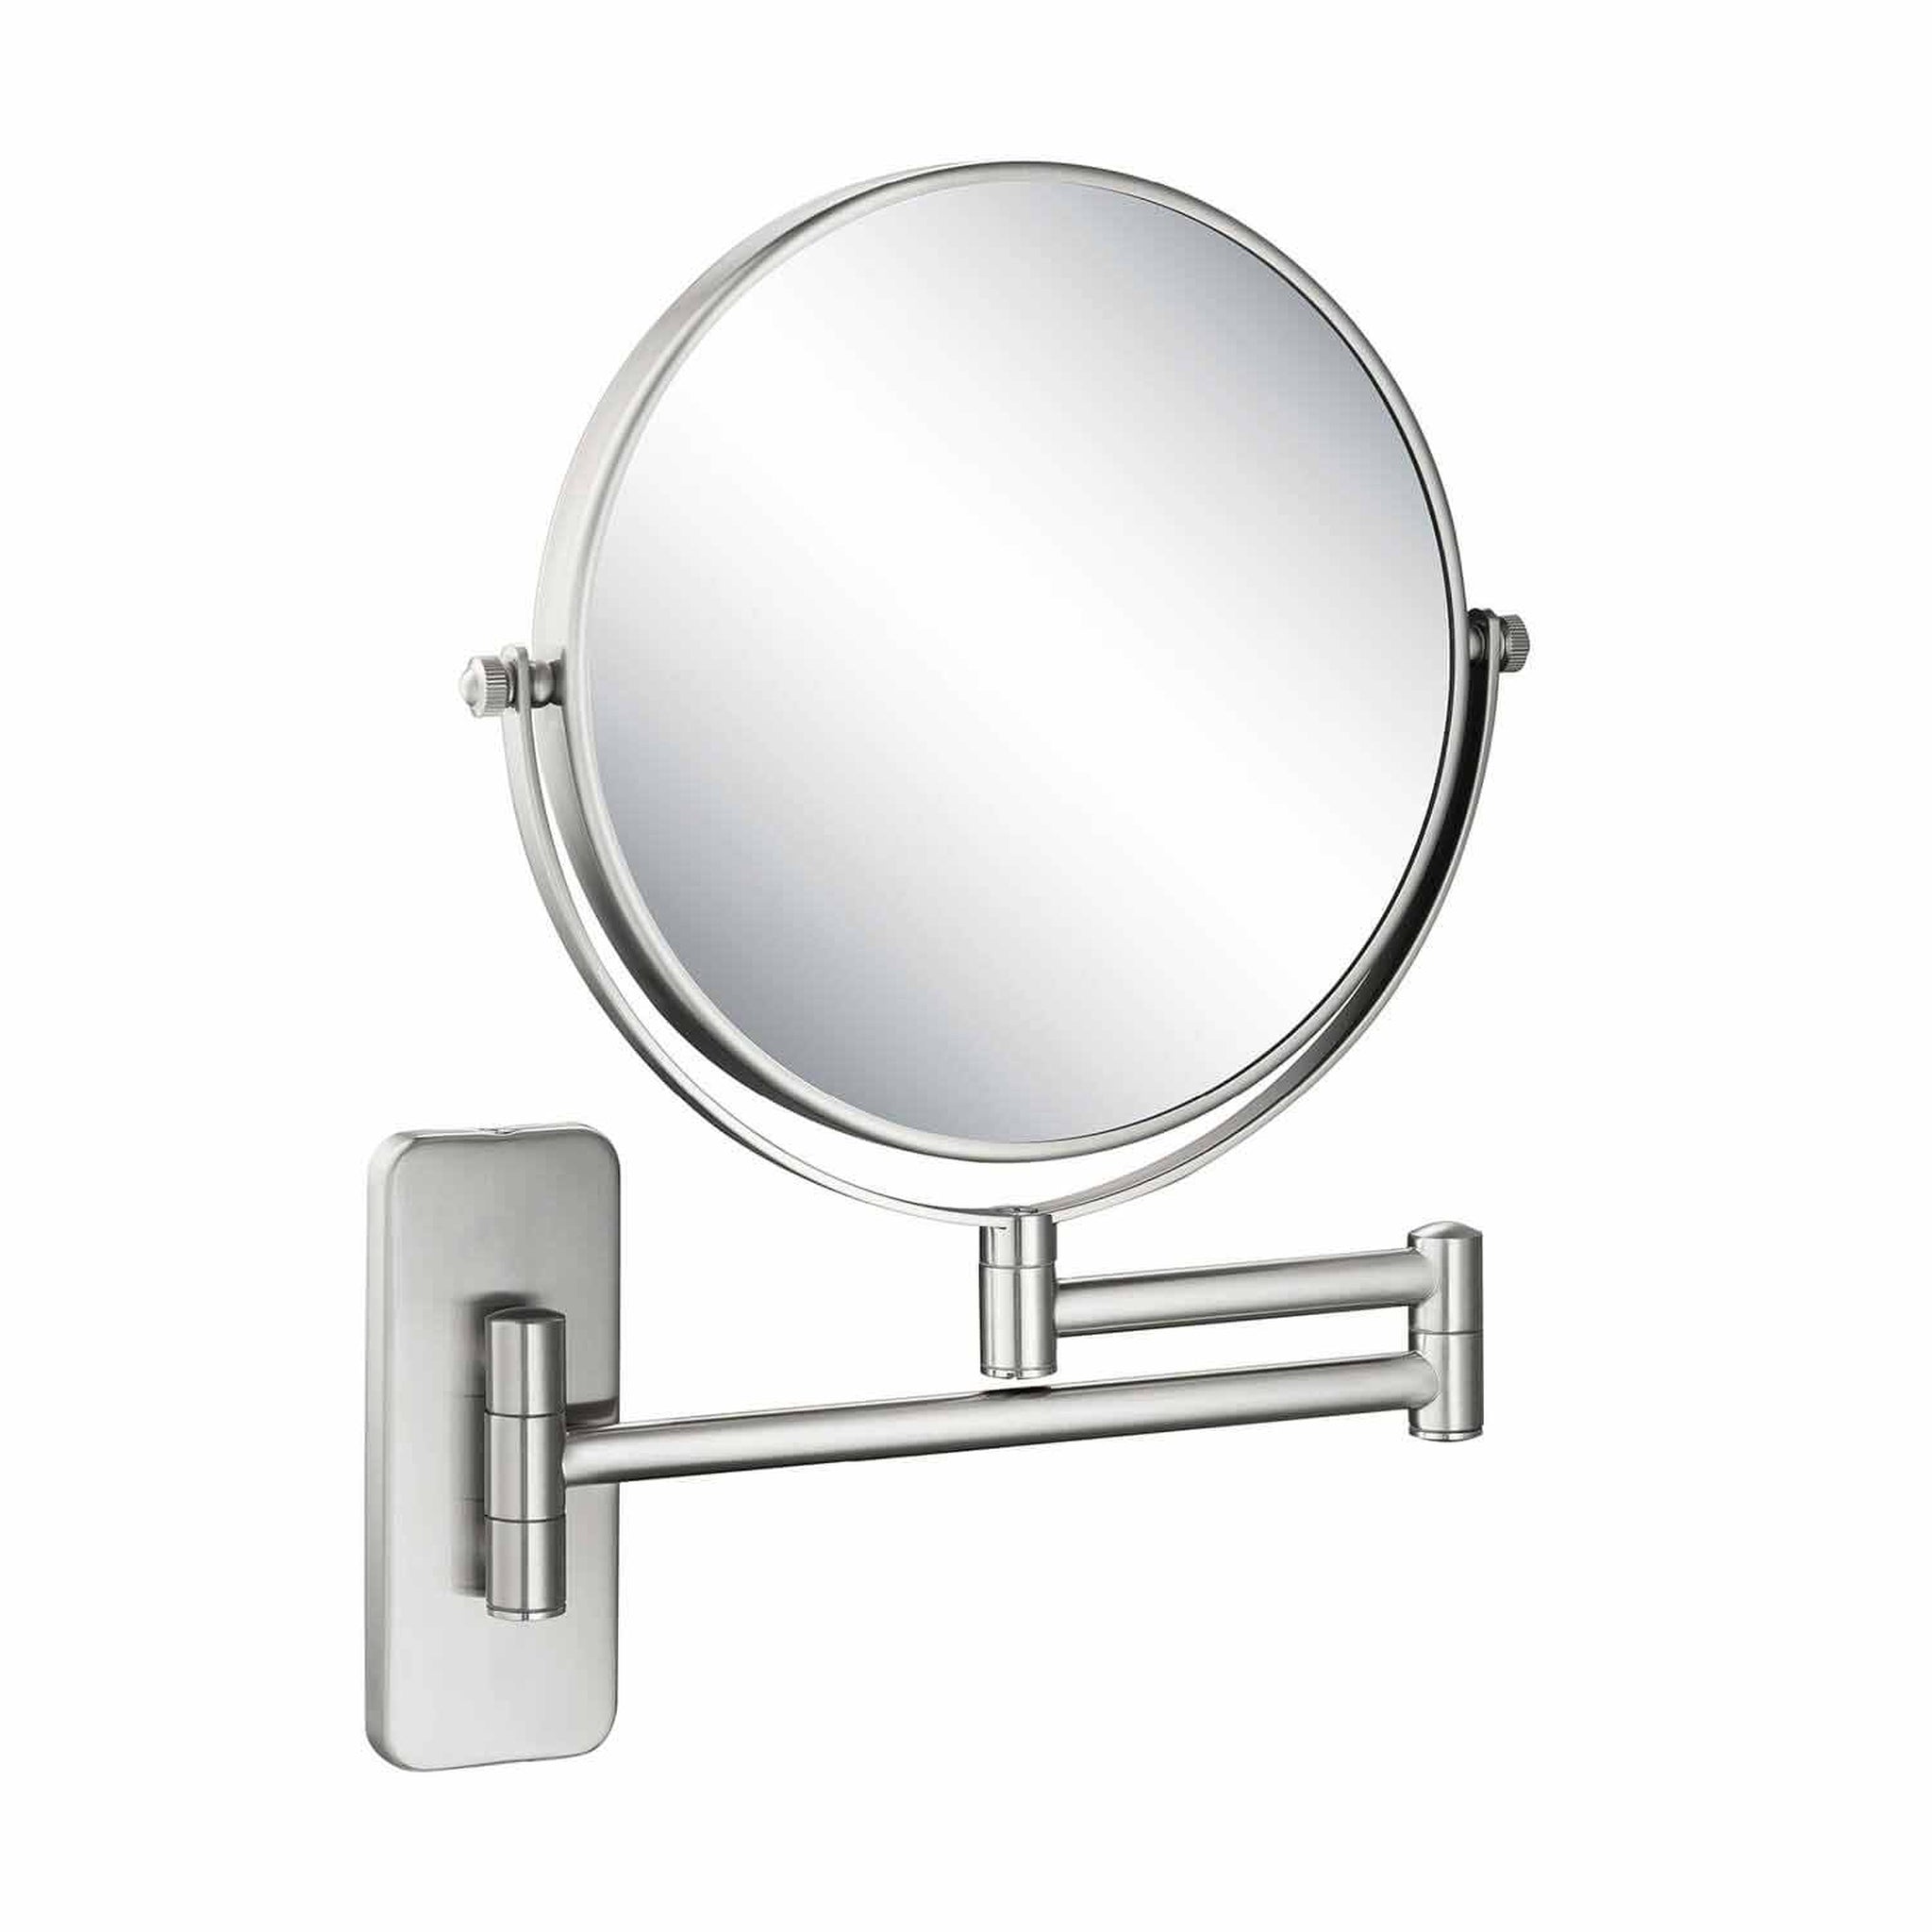 KIBI, KIBI Circular Brass Bathroom Magnifying Makeup Shaving Mirror in Brushed Nickel Frame Finish